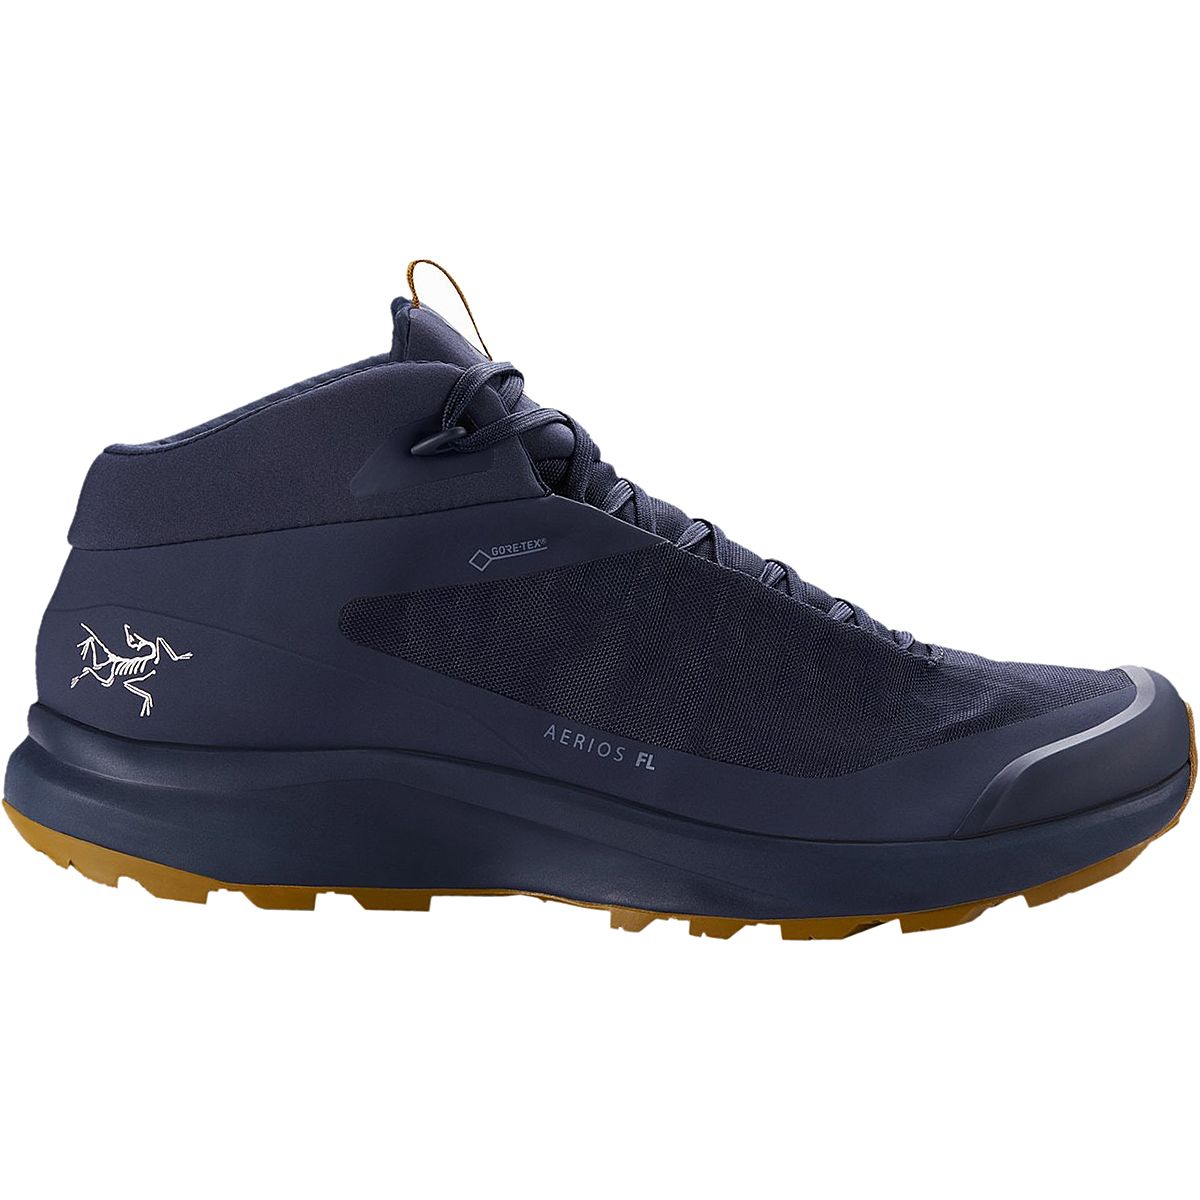 Arc'teryx Aerios FL GTX Mid Hiking Shoe - Men's